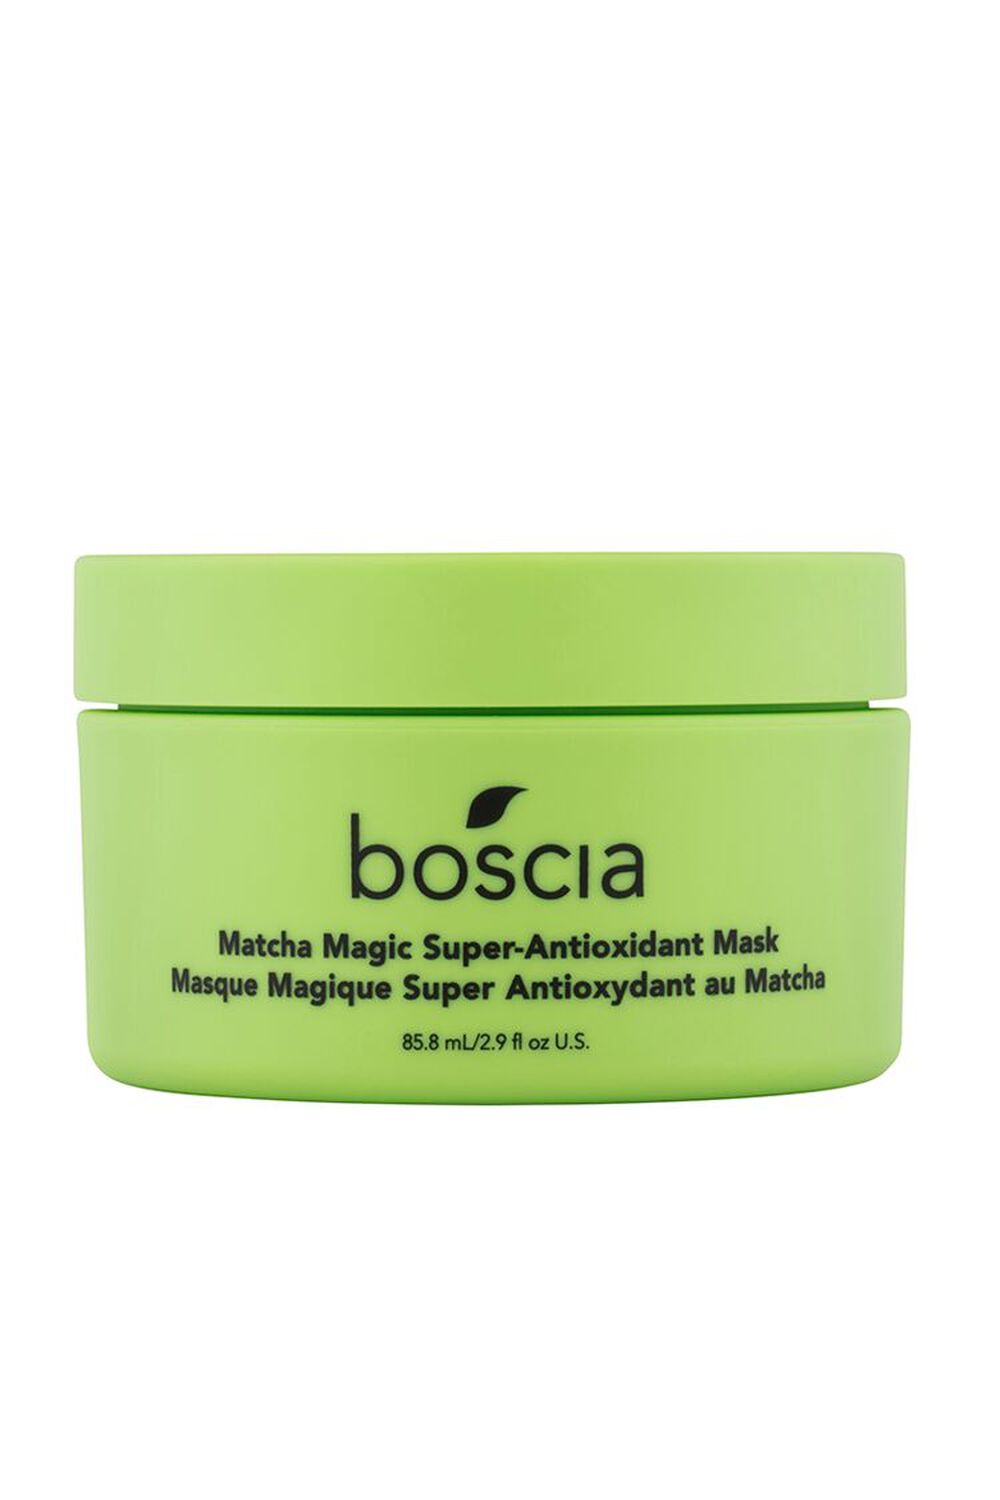 boscia Matcha Magic Super-Antioxidant Mask, image 2